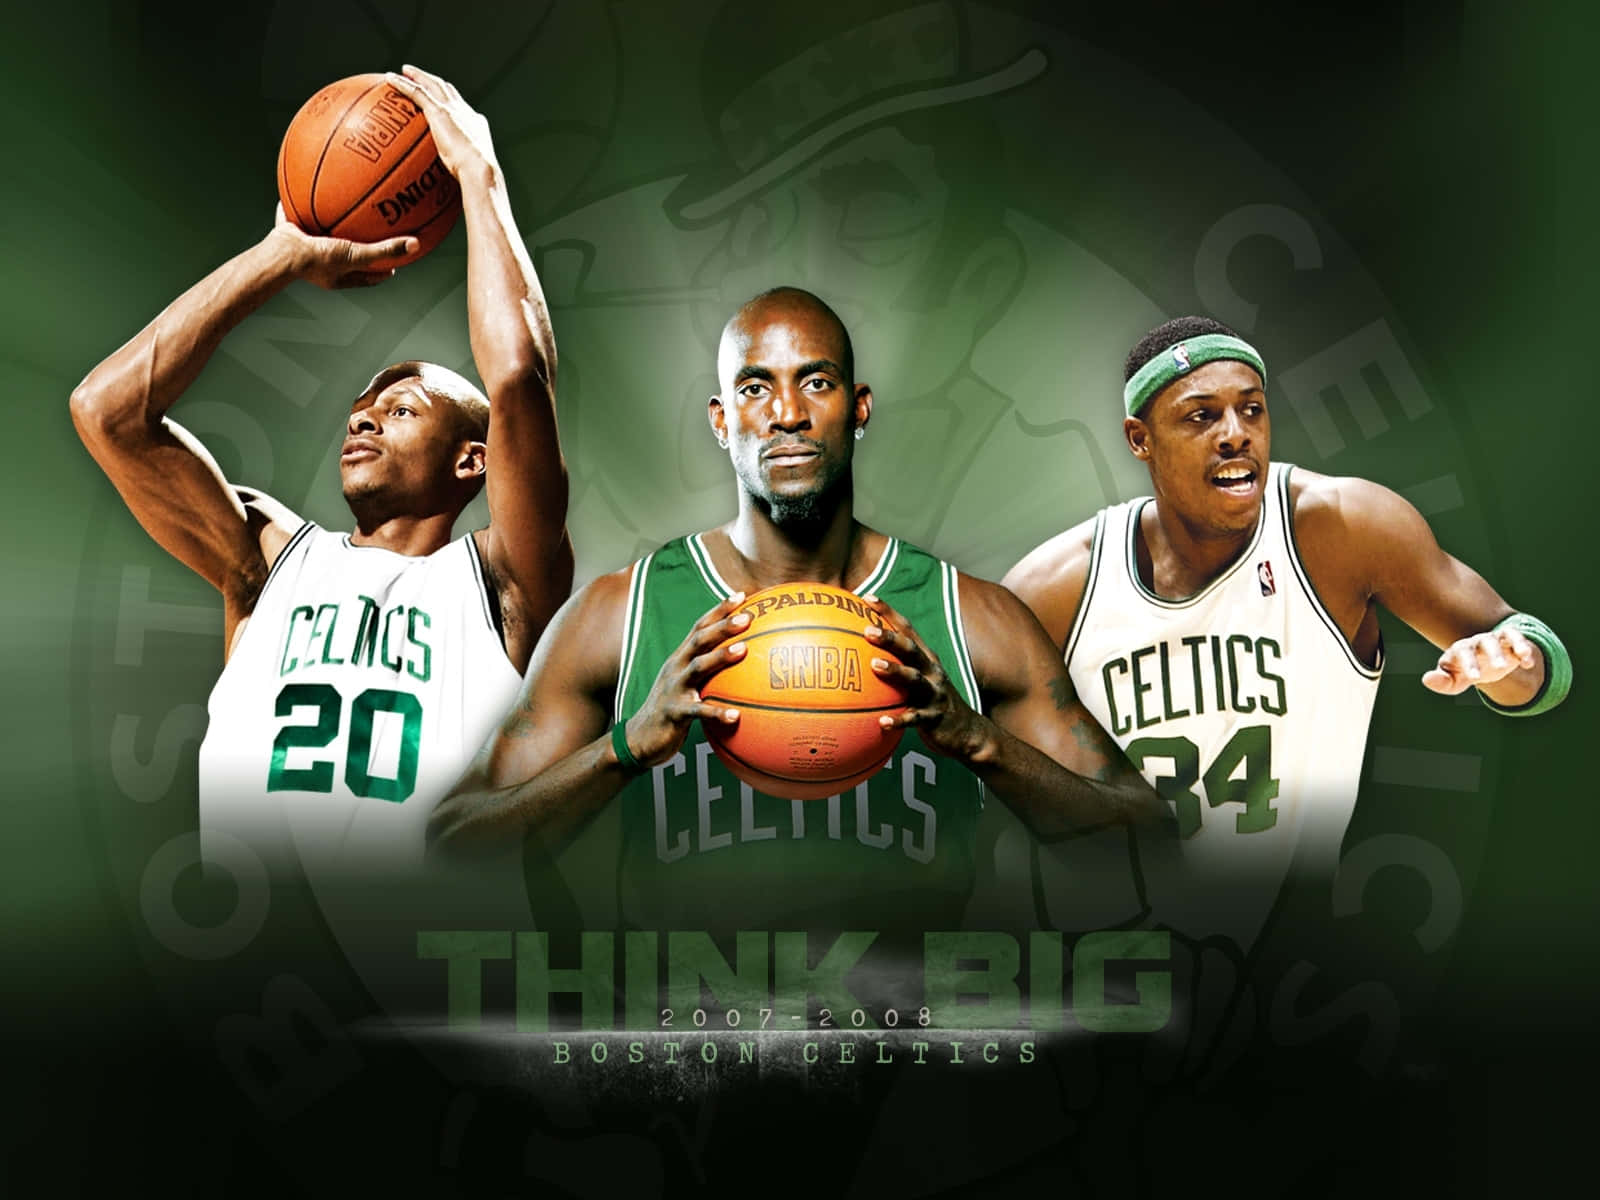 The Boston Celtics, paving the road to success